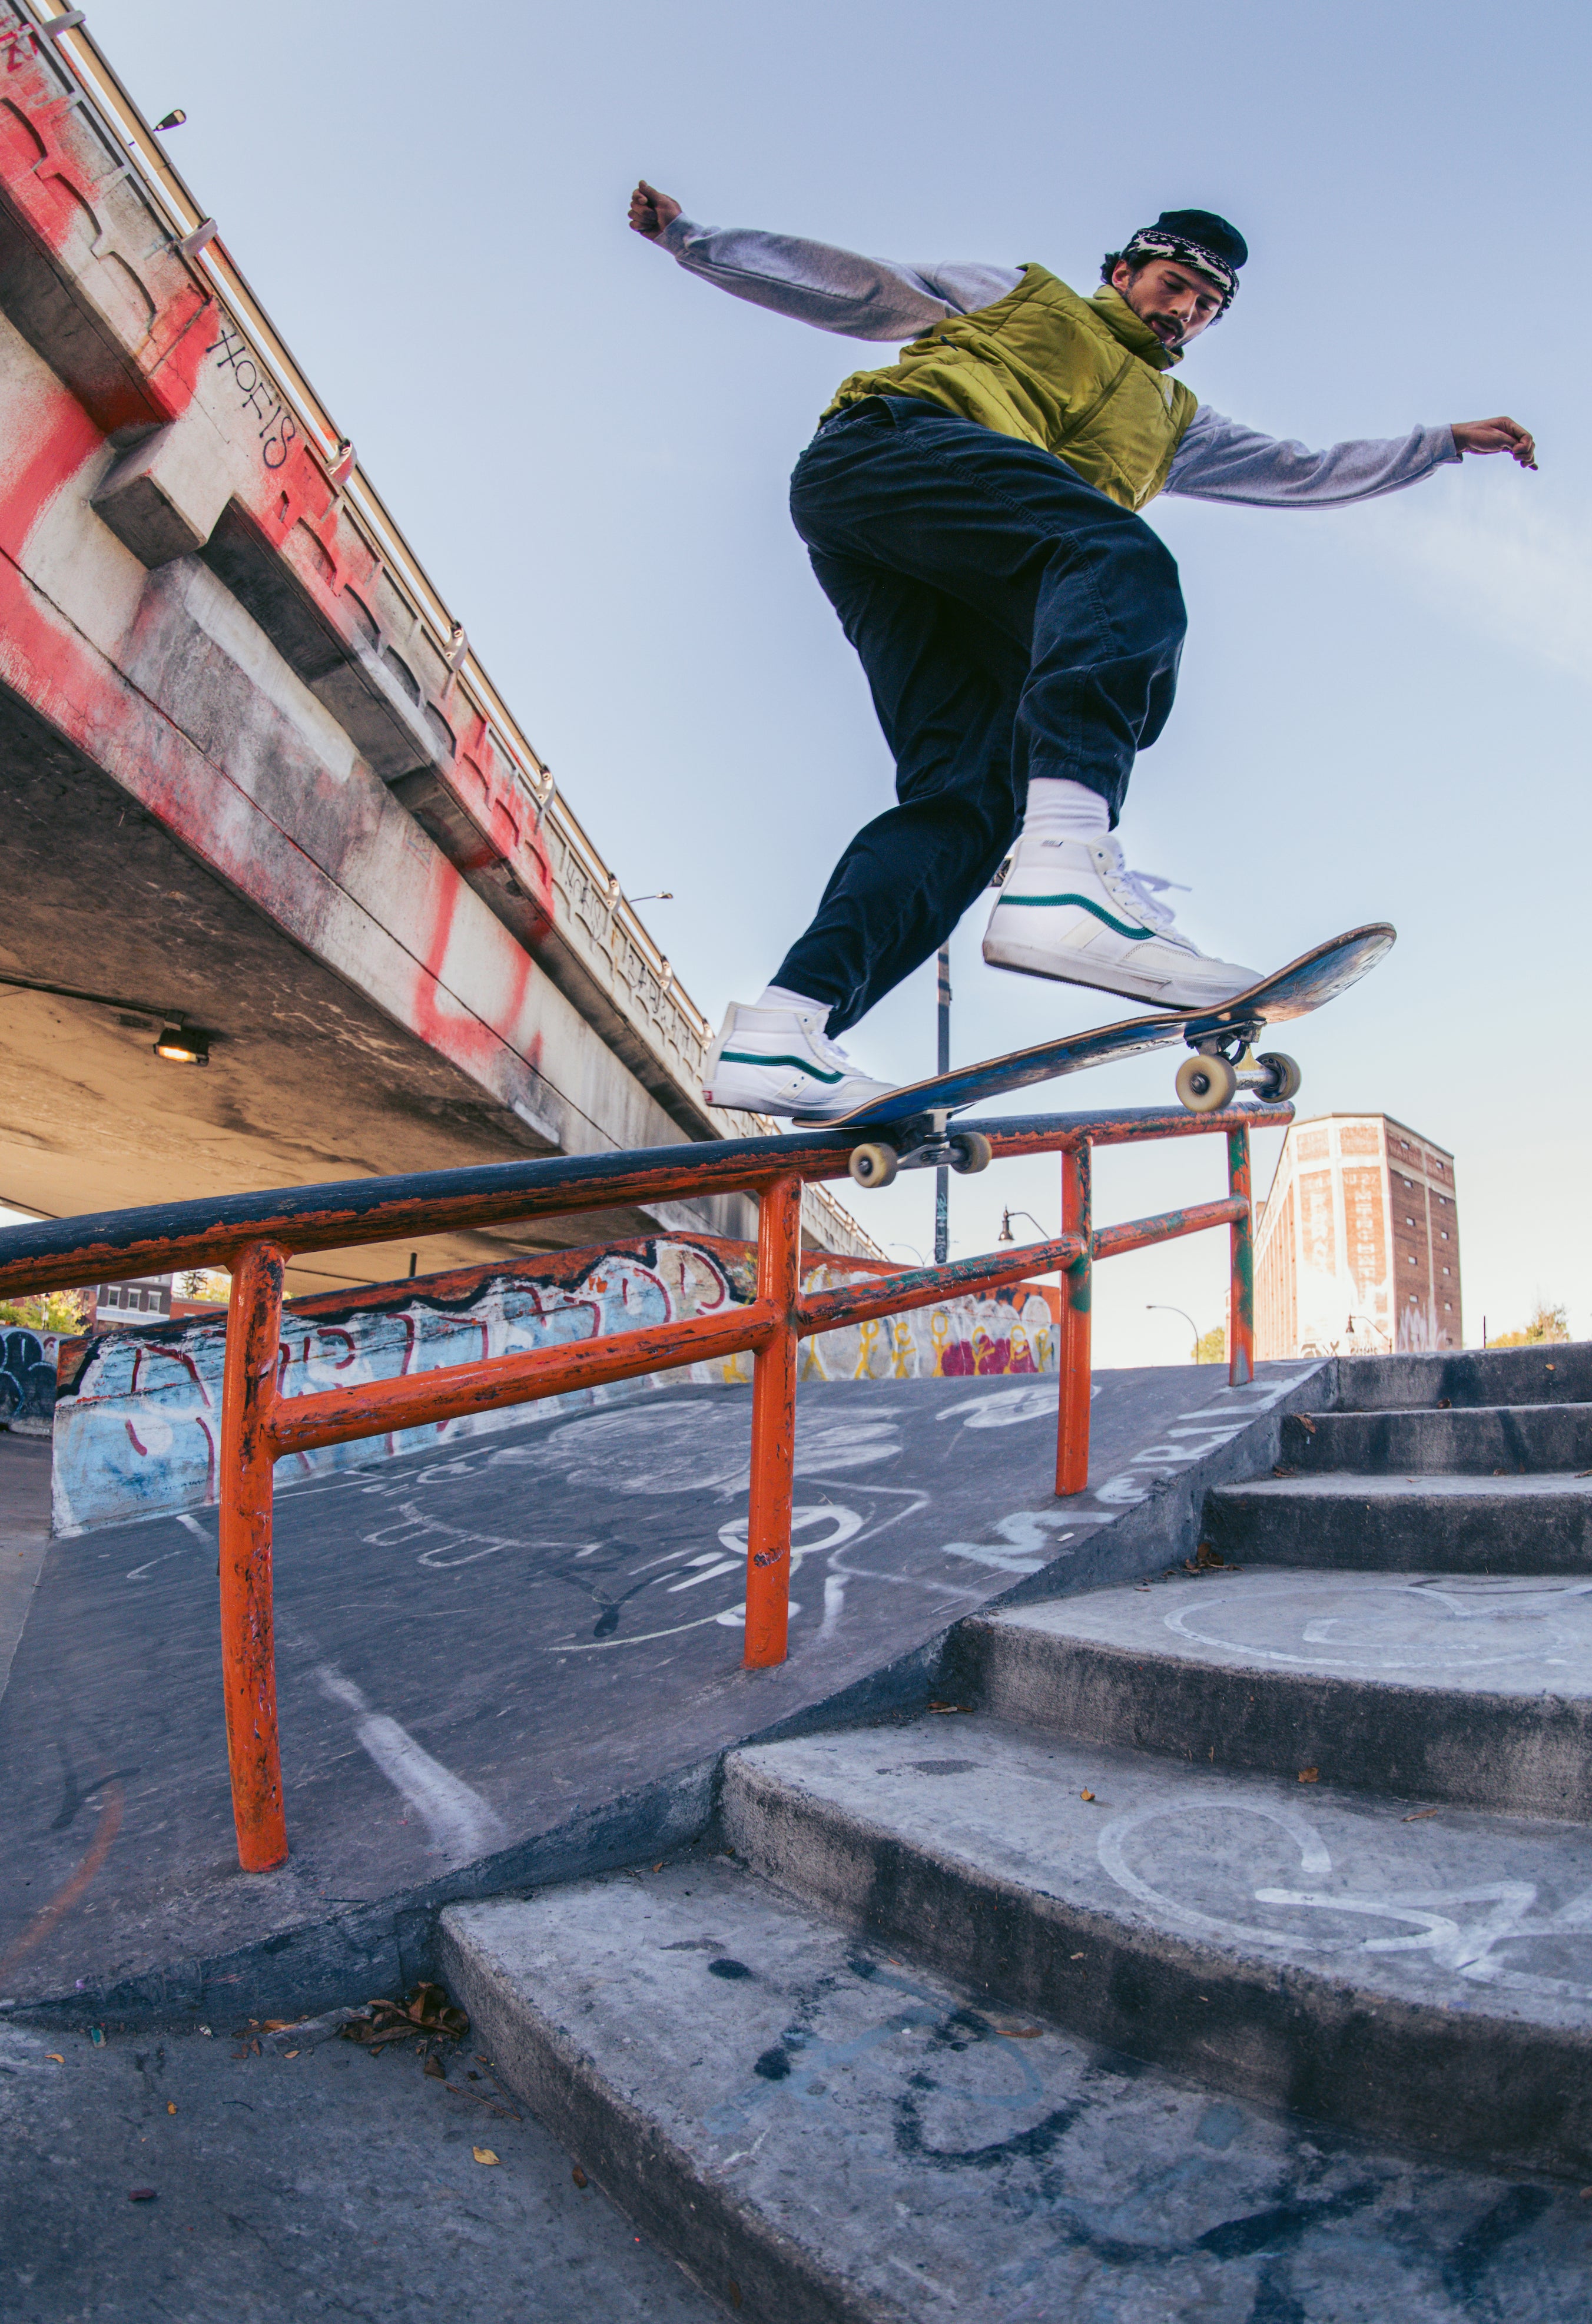 Skateboarding Rail Tricks: Master the Grind!